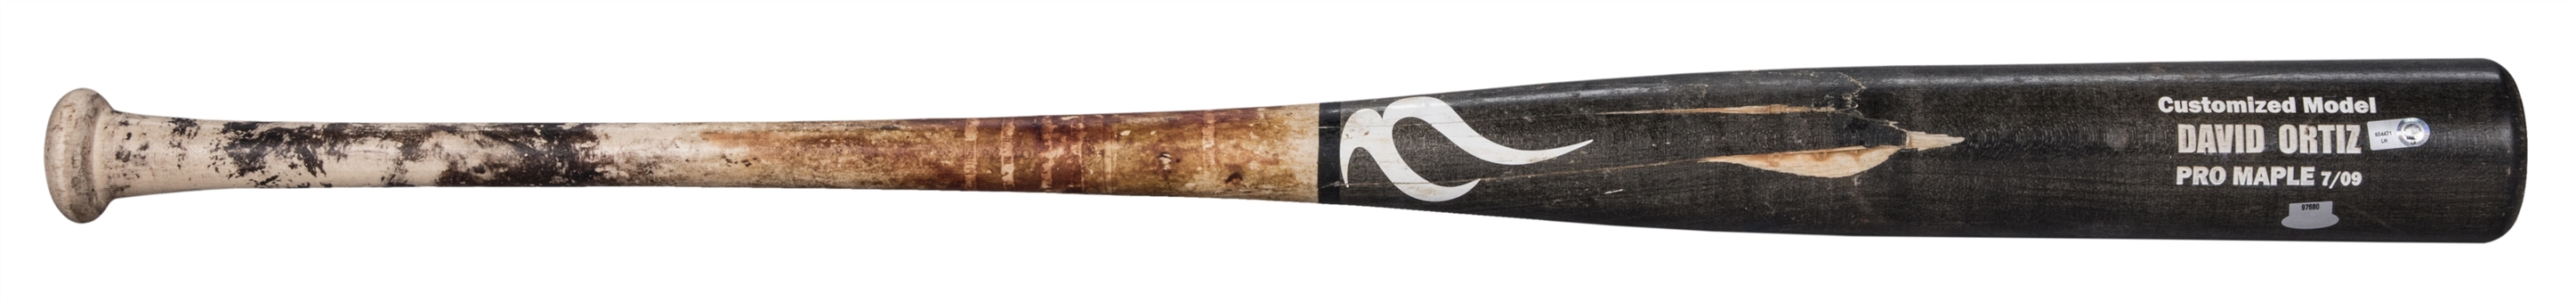 2009 David Ortiz Game Used Nokoma Custom Model Photo Matched Bat Used To Hit Home Run Vs. Yankees (MLB Authenticated)